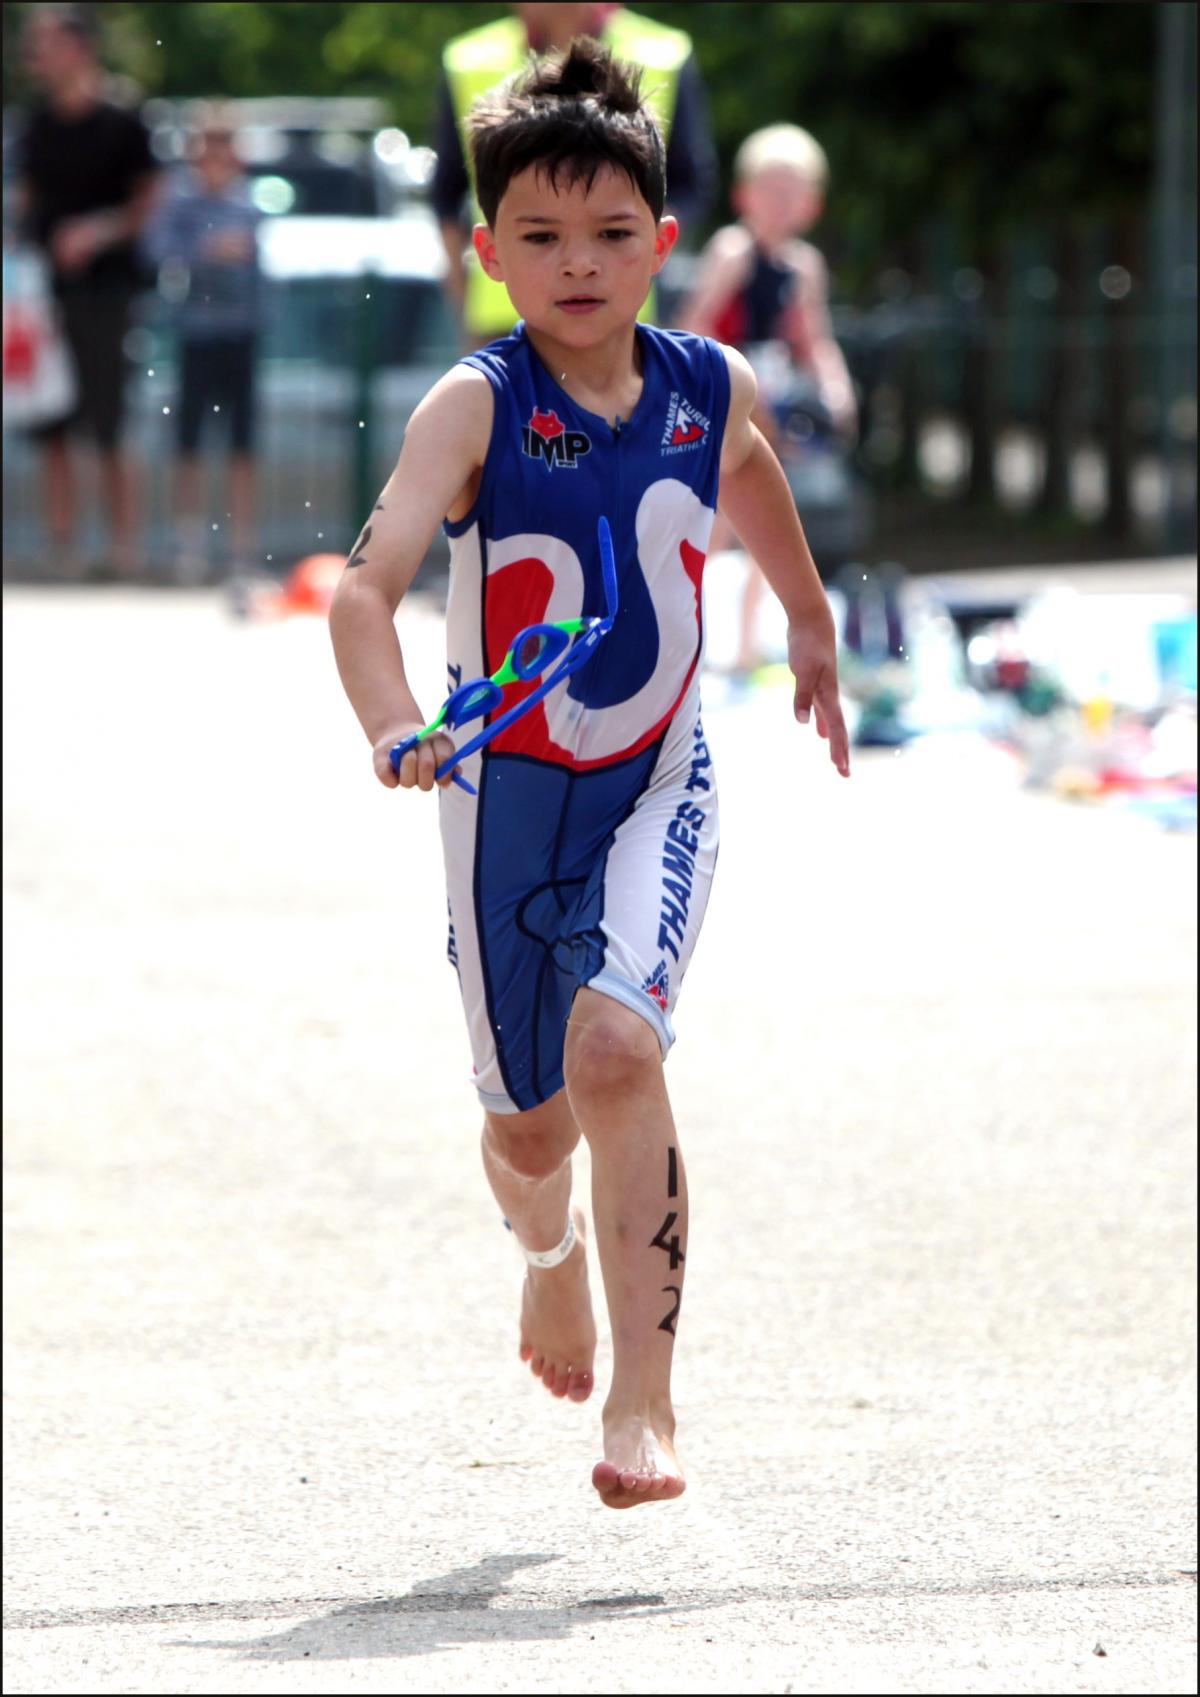 Fleming Park Junior Triathlon. Weekend in Pictures. Saturday May 31, 2014 - Sunday June 1, 2014.